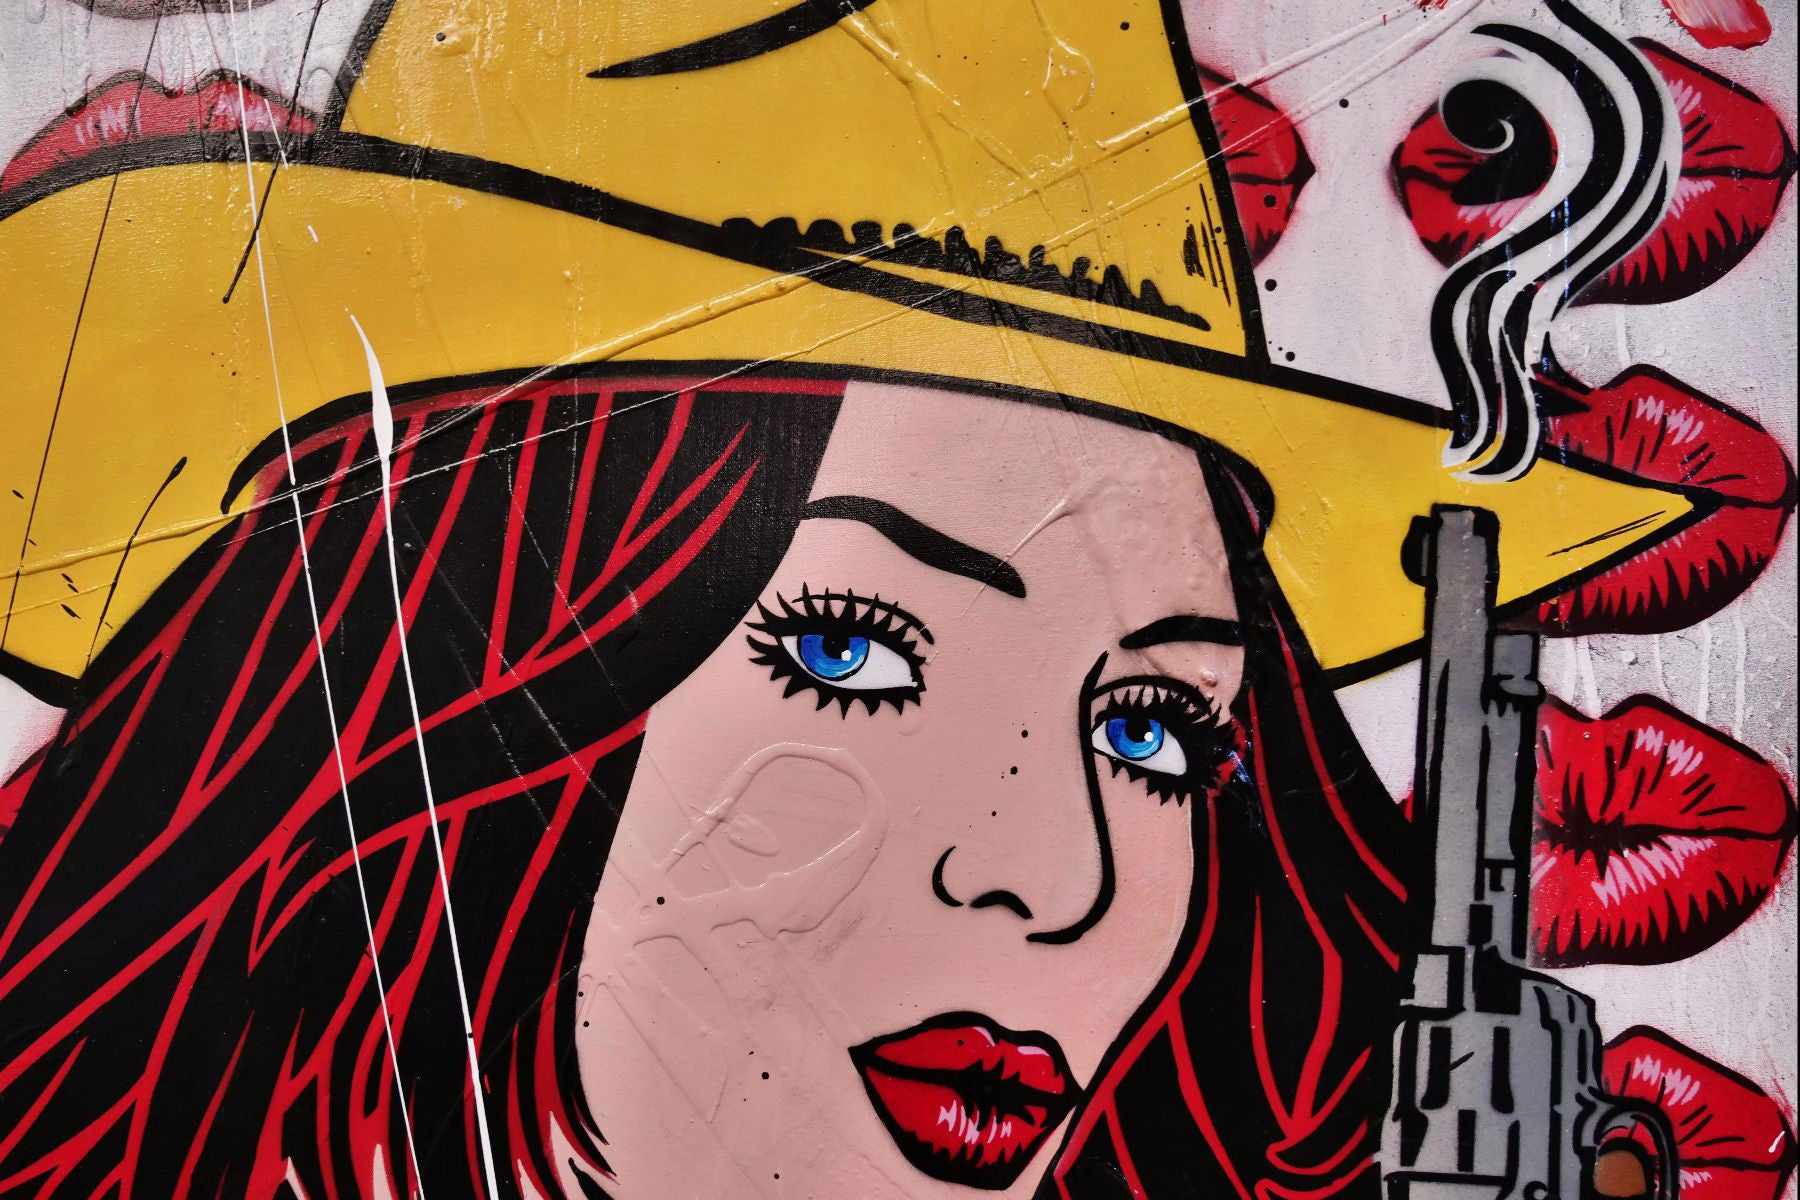 Pucker Up Cowboy 75cm x 100cm Cowgirl Textured Urban Pop Art Painting